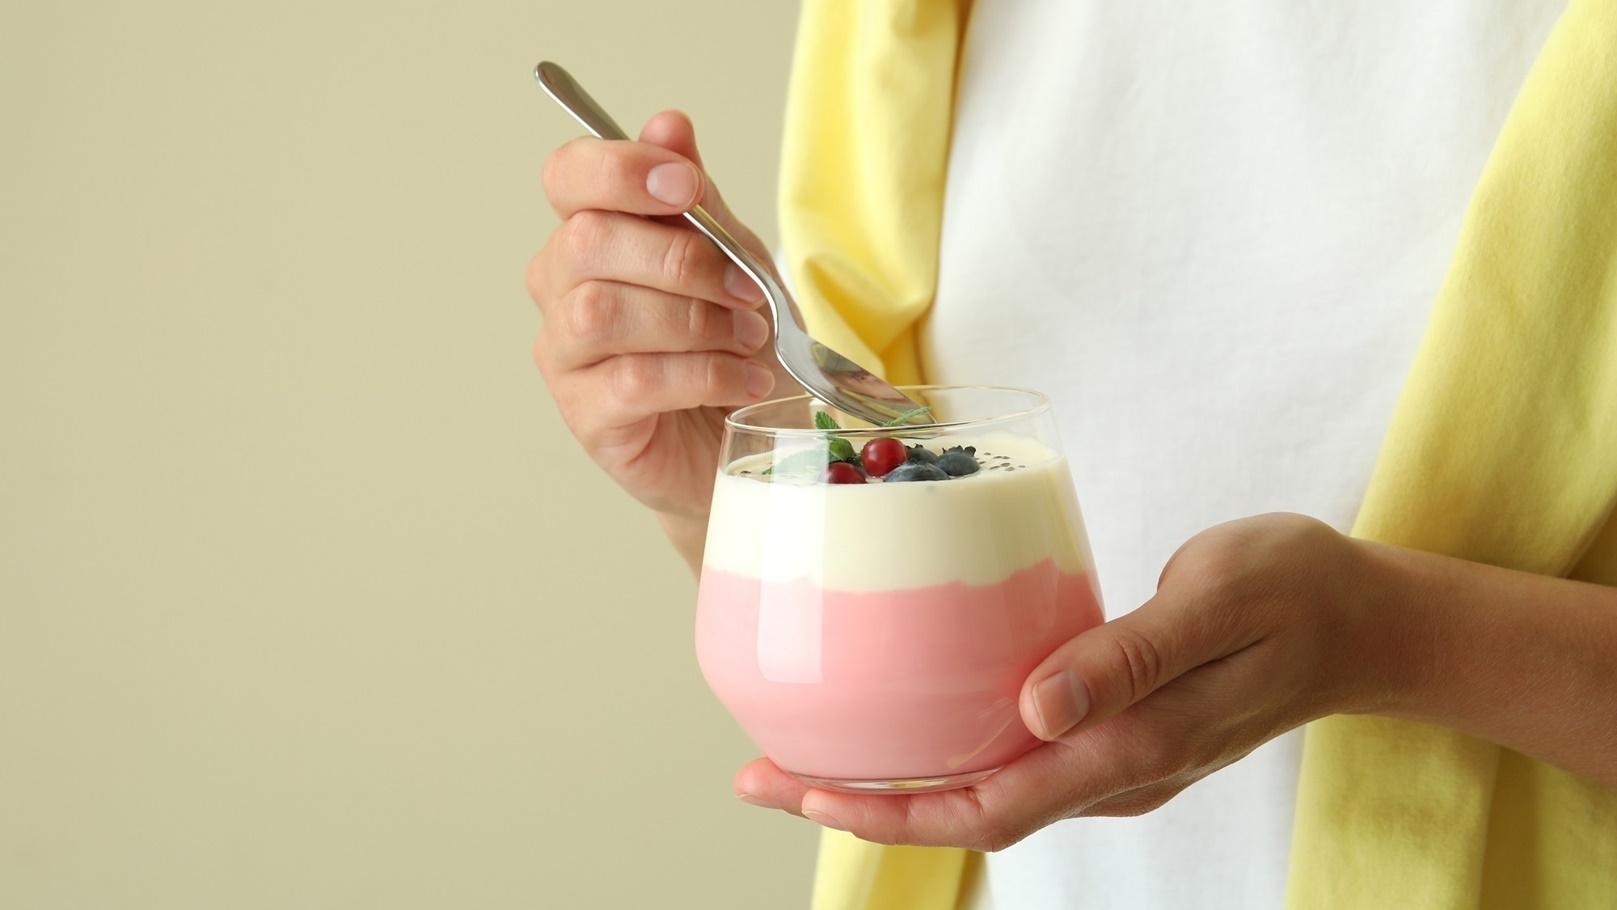 young-woman-eats-berry-yogurt-close-up-2021-09-04-04-09-58-utc